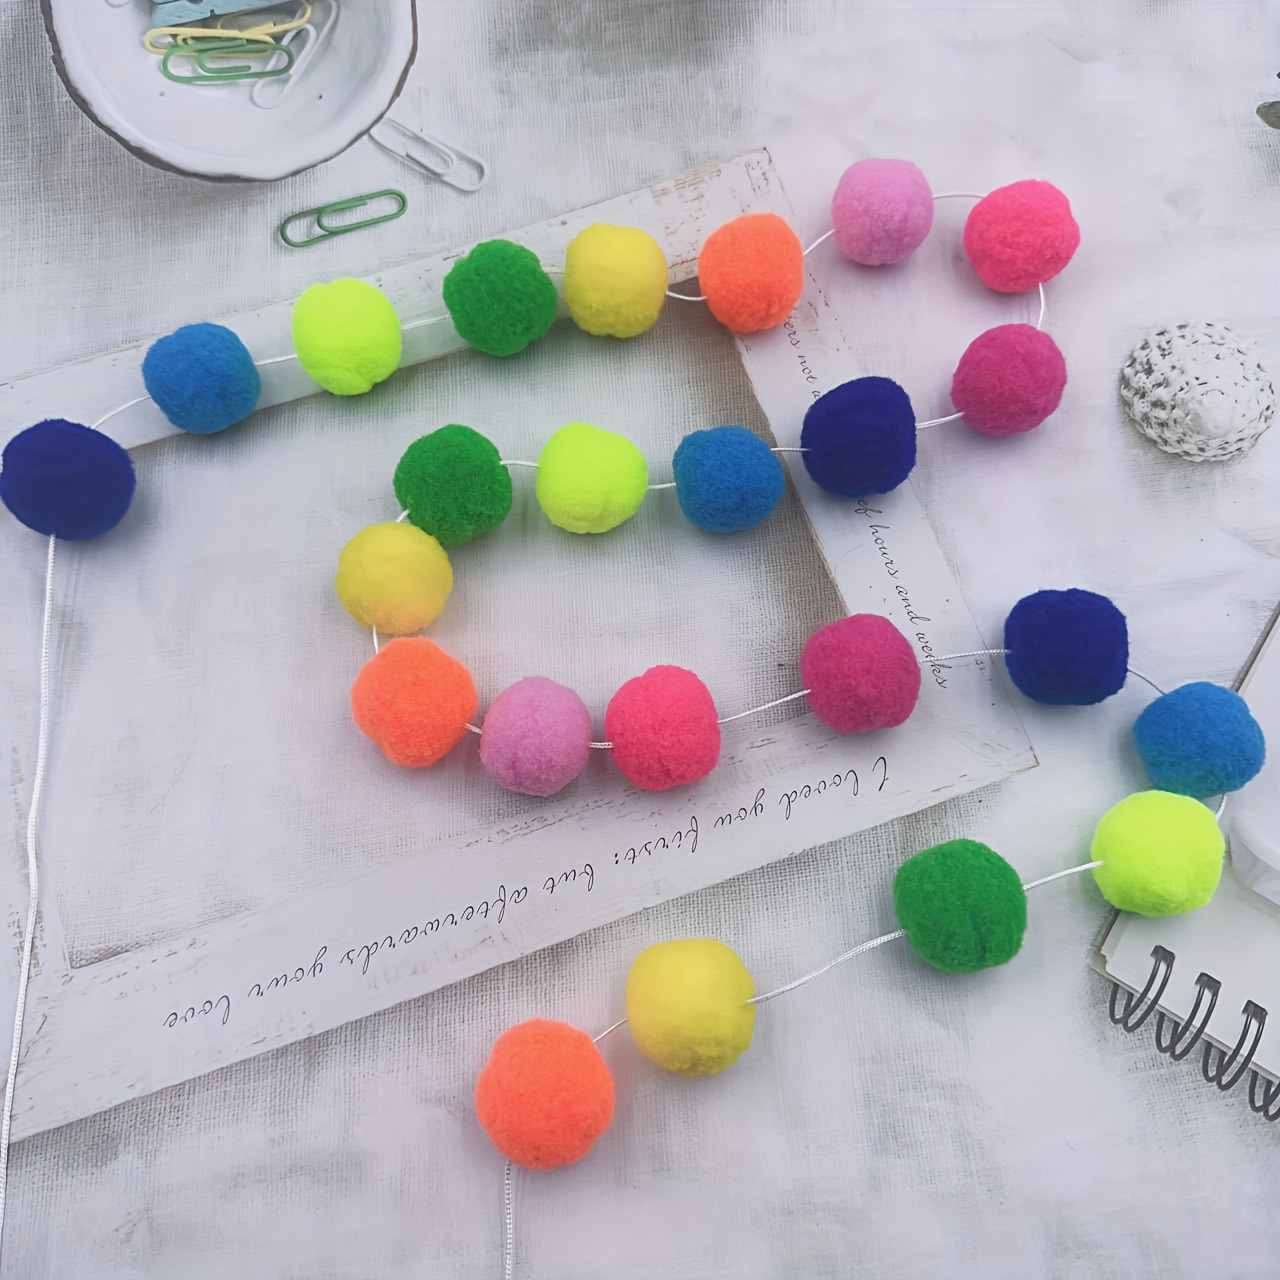 Blossom Pom Palette // Felt Pom-poms // Multi Colored Felt Balls, DIY  Garland Kit, Rainbow Crafts, Wool Beads, Decor 